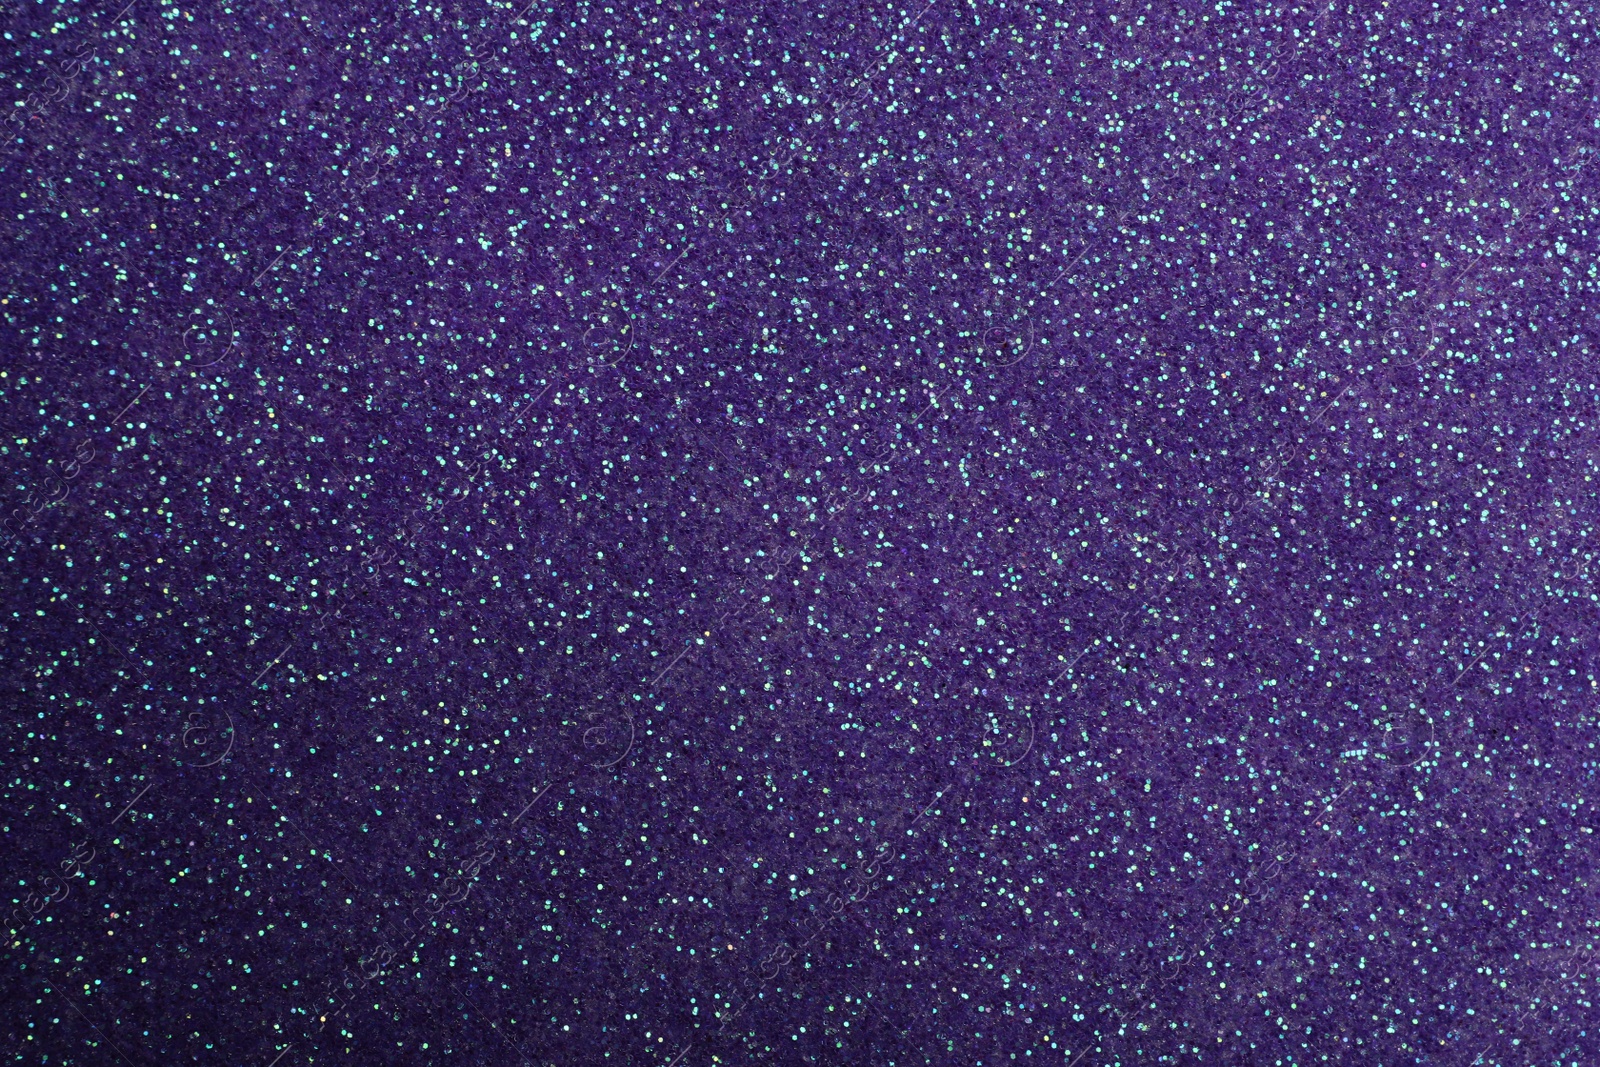 Photo of Beautiful shiny violet glitter as background, closeup